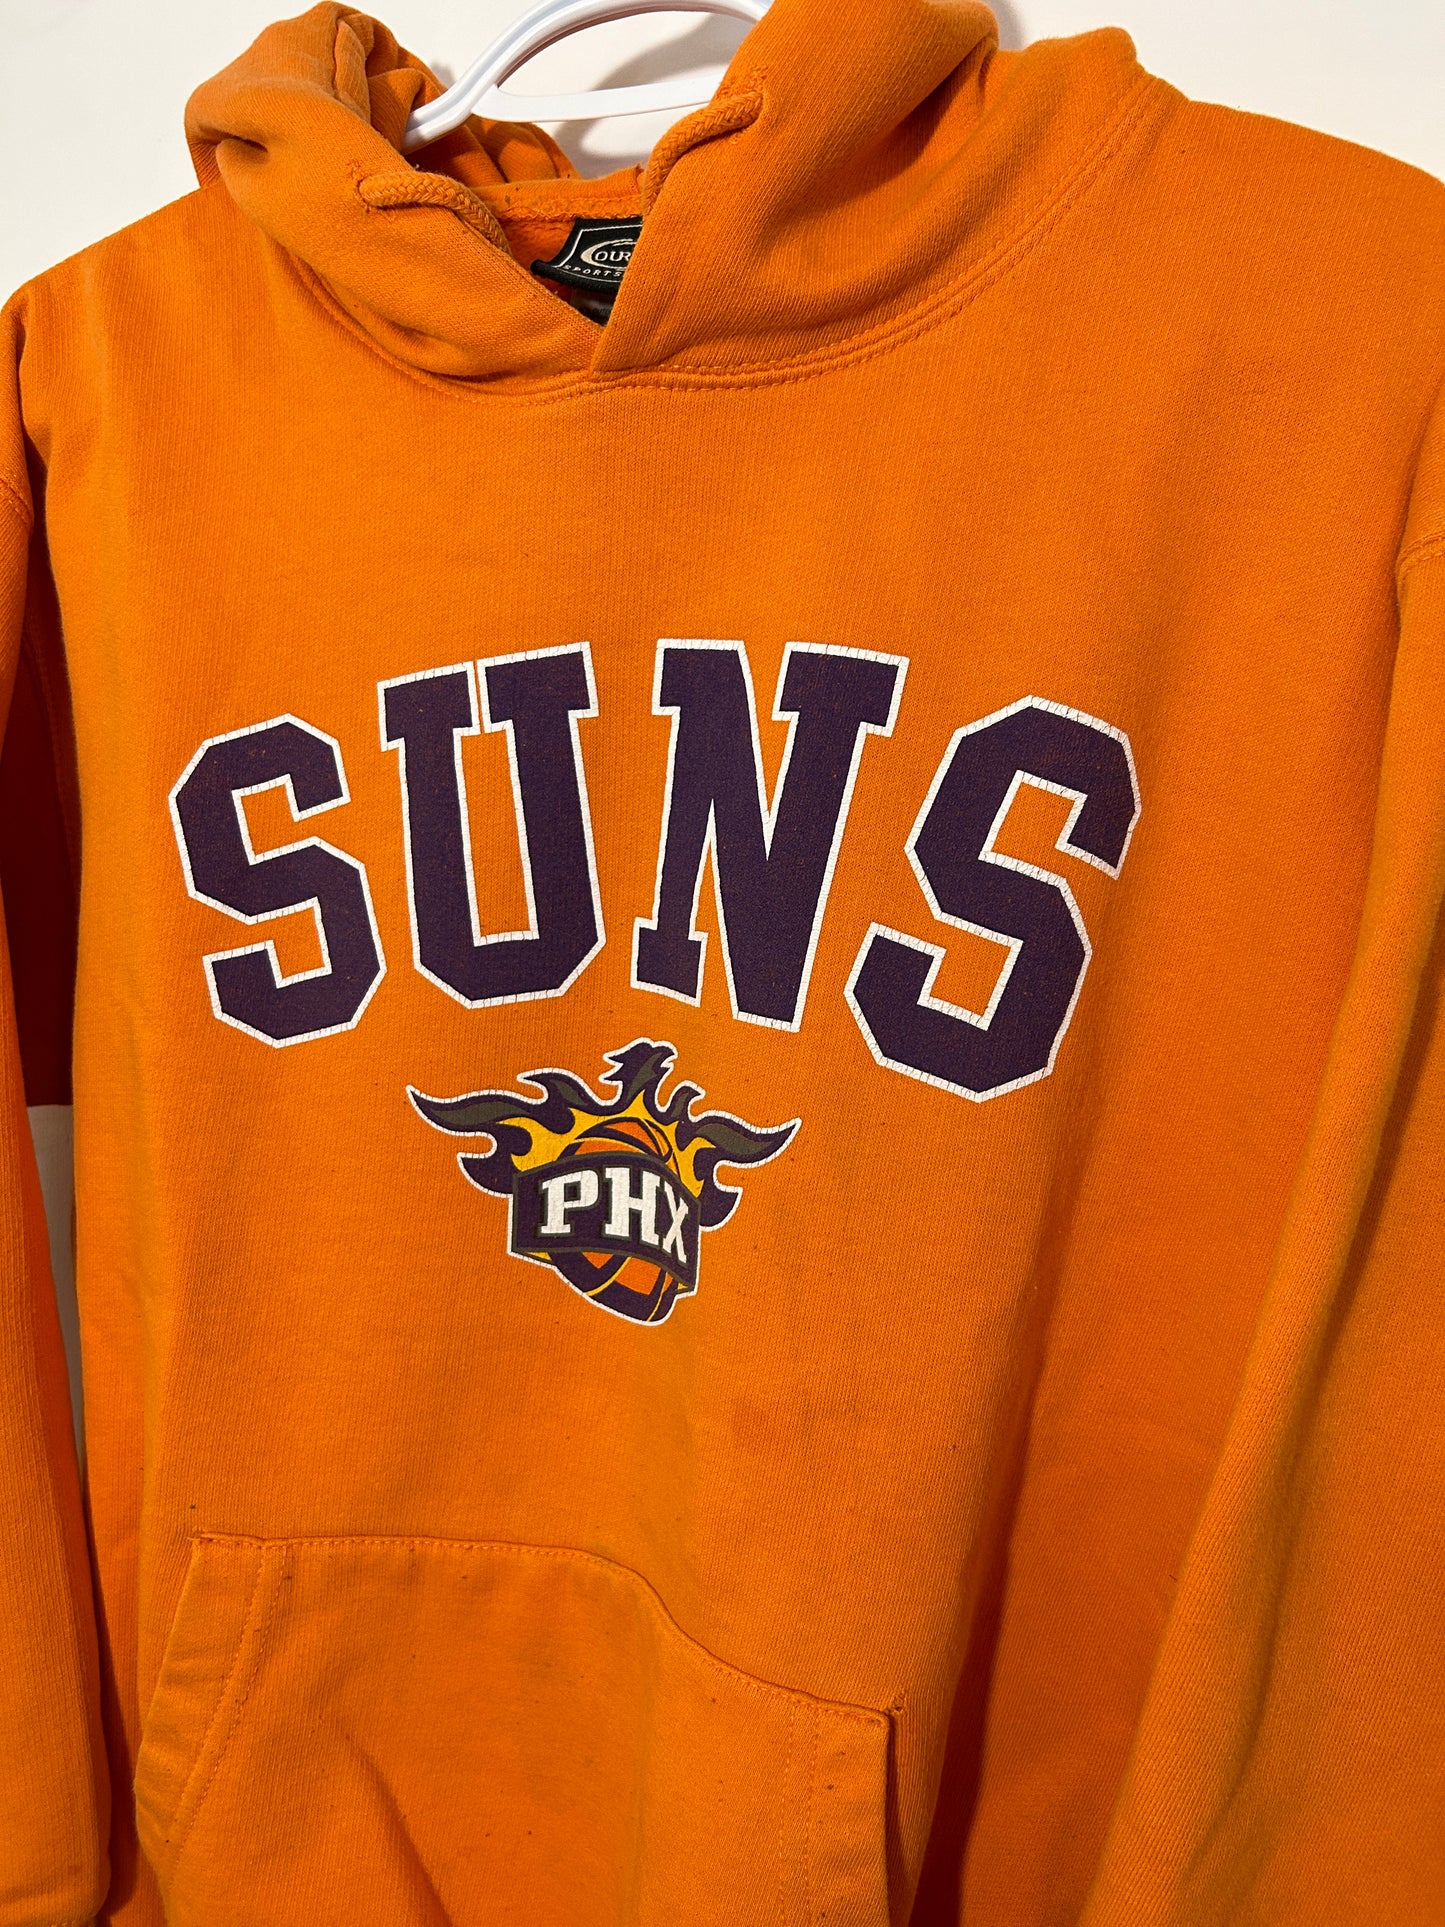 Vintage Ouray Sportswear Phoenix Suns Hoodie (M)